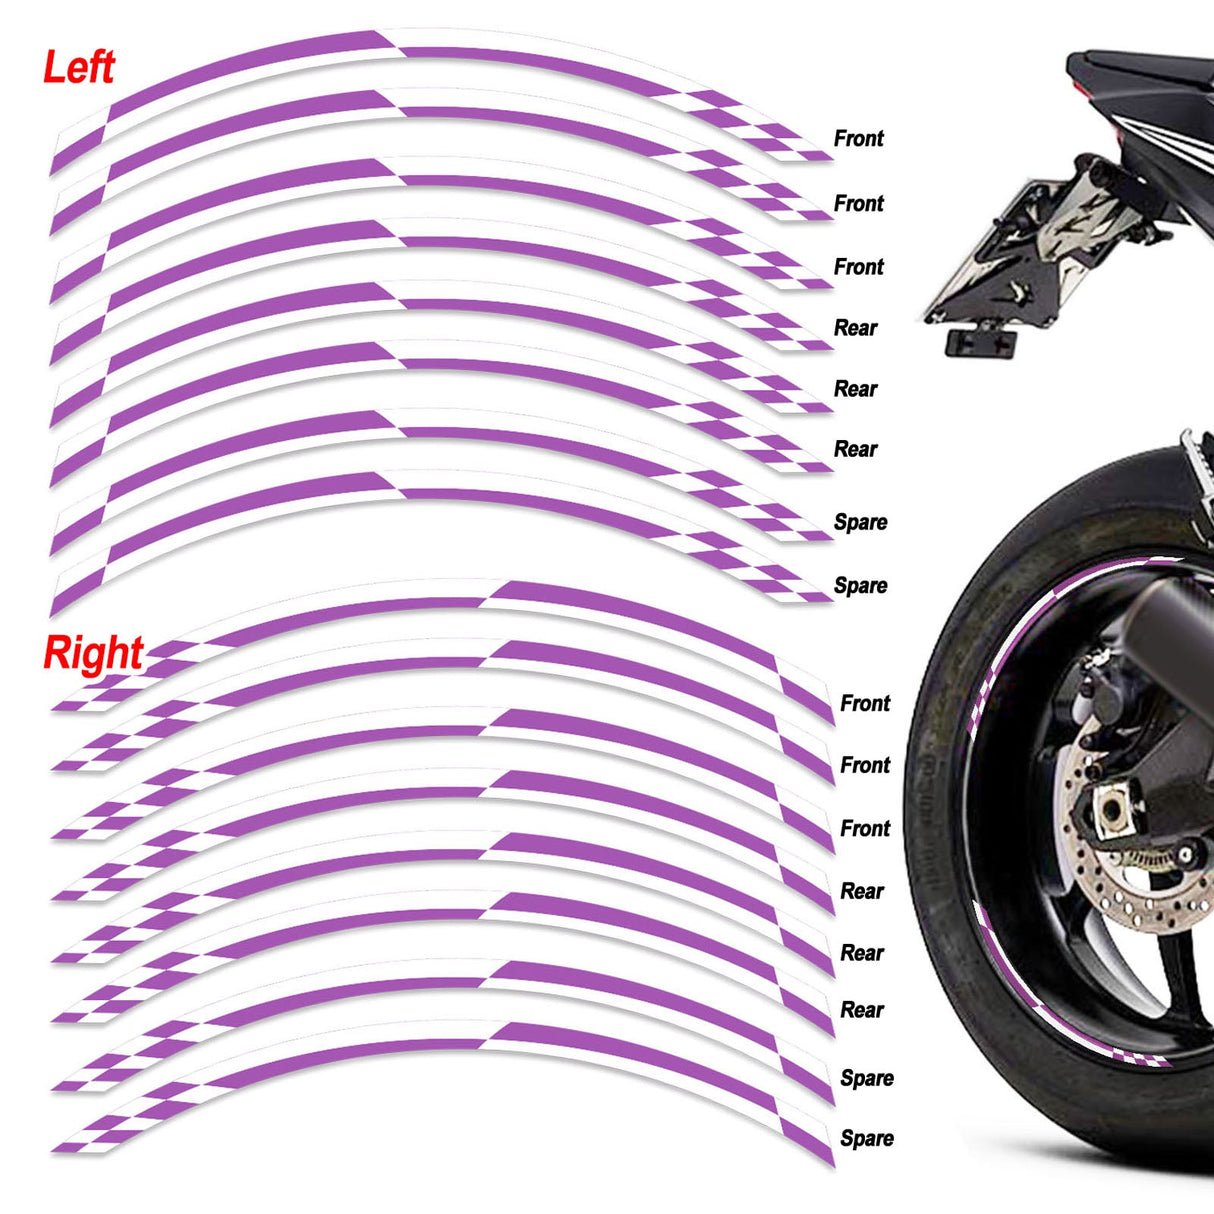 StickerBao Purple Check01 White Standard Edge Rim Sticker Universal Motorcycle 17 inch Wheel Stripe Decal For Triumph